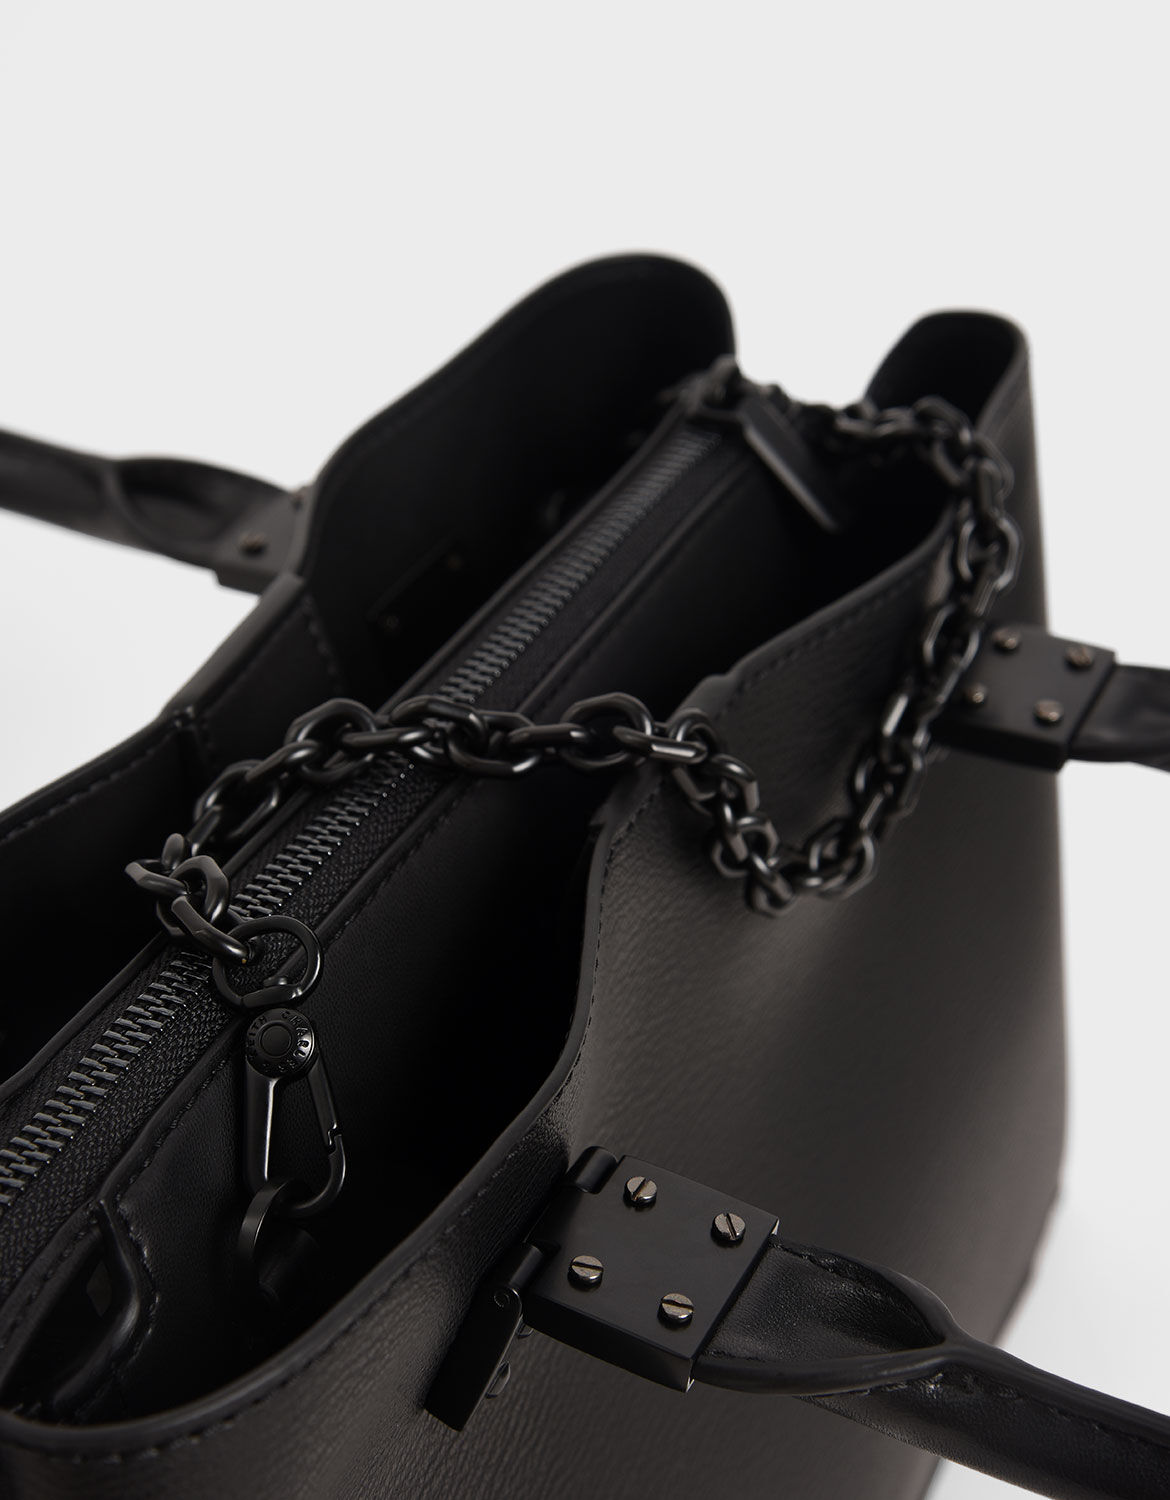 Chain Handle Bag - Ultra-Matte Black